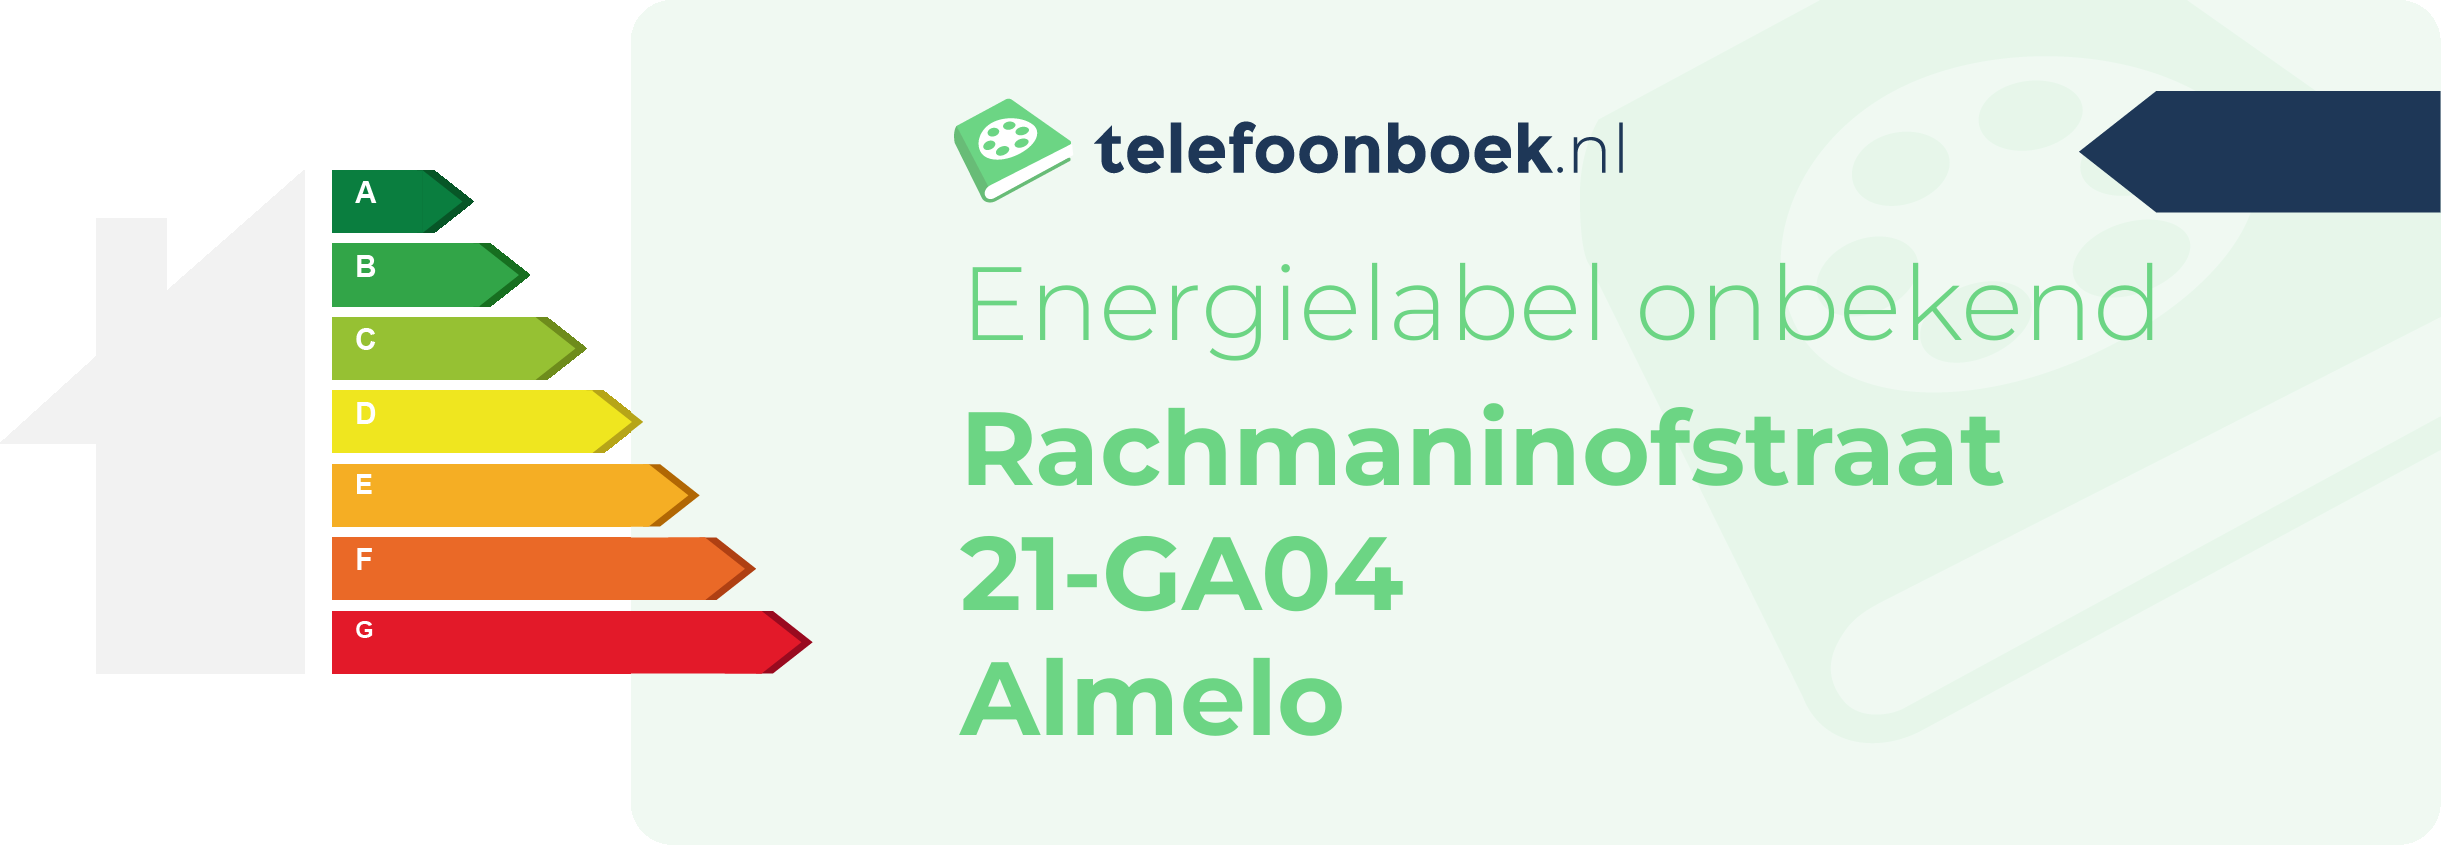 Energielabel Rachmaninofstraat 21-GA04 Almelo